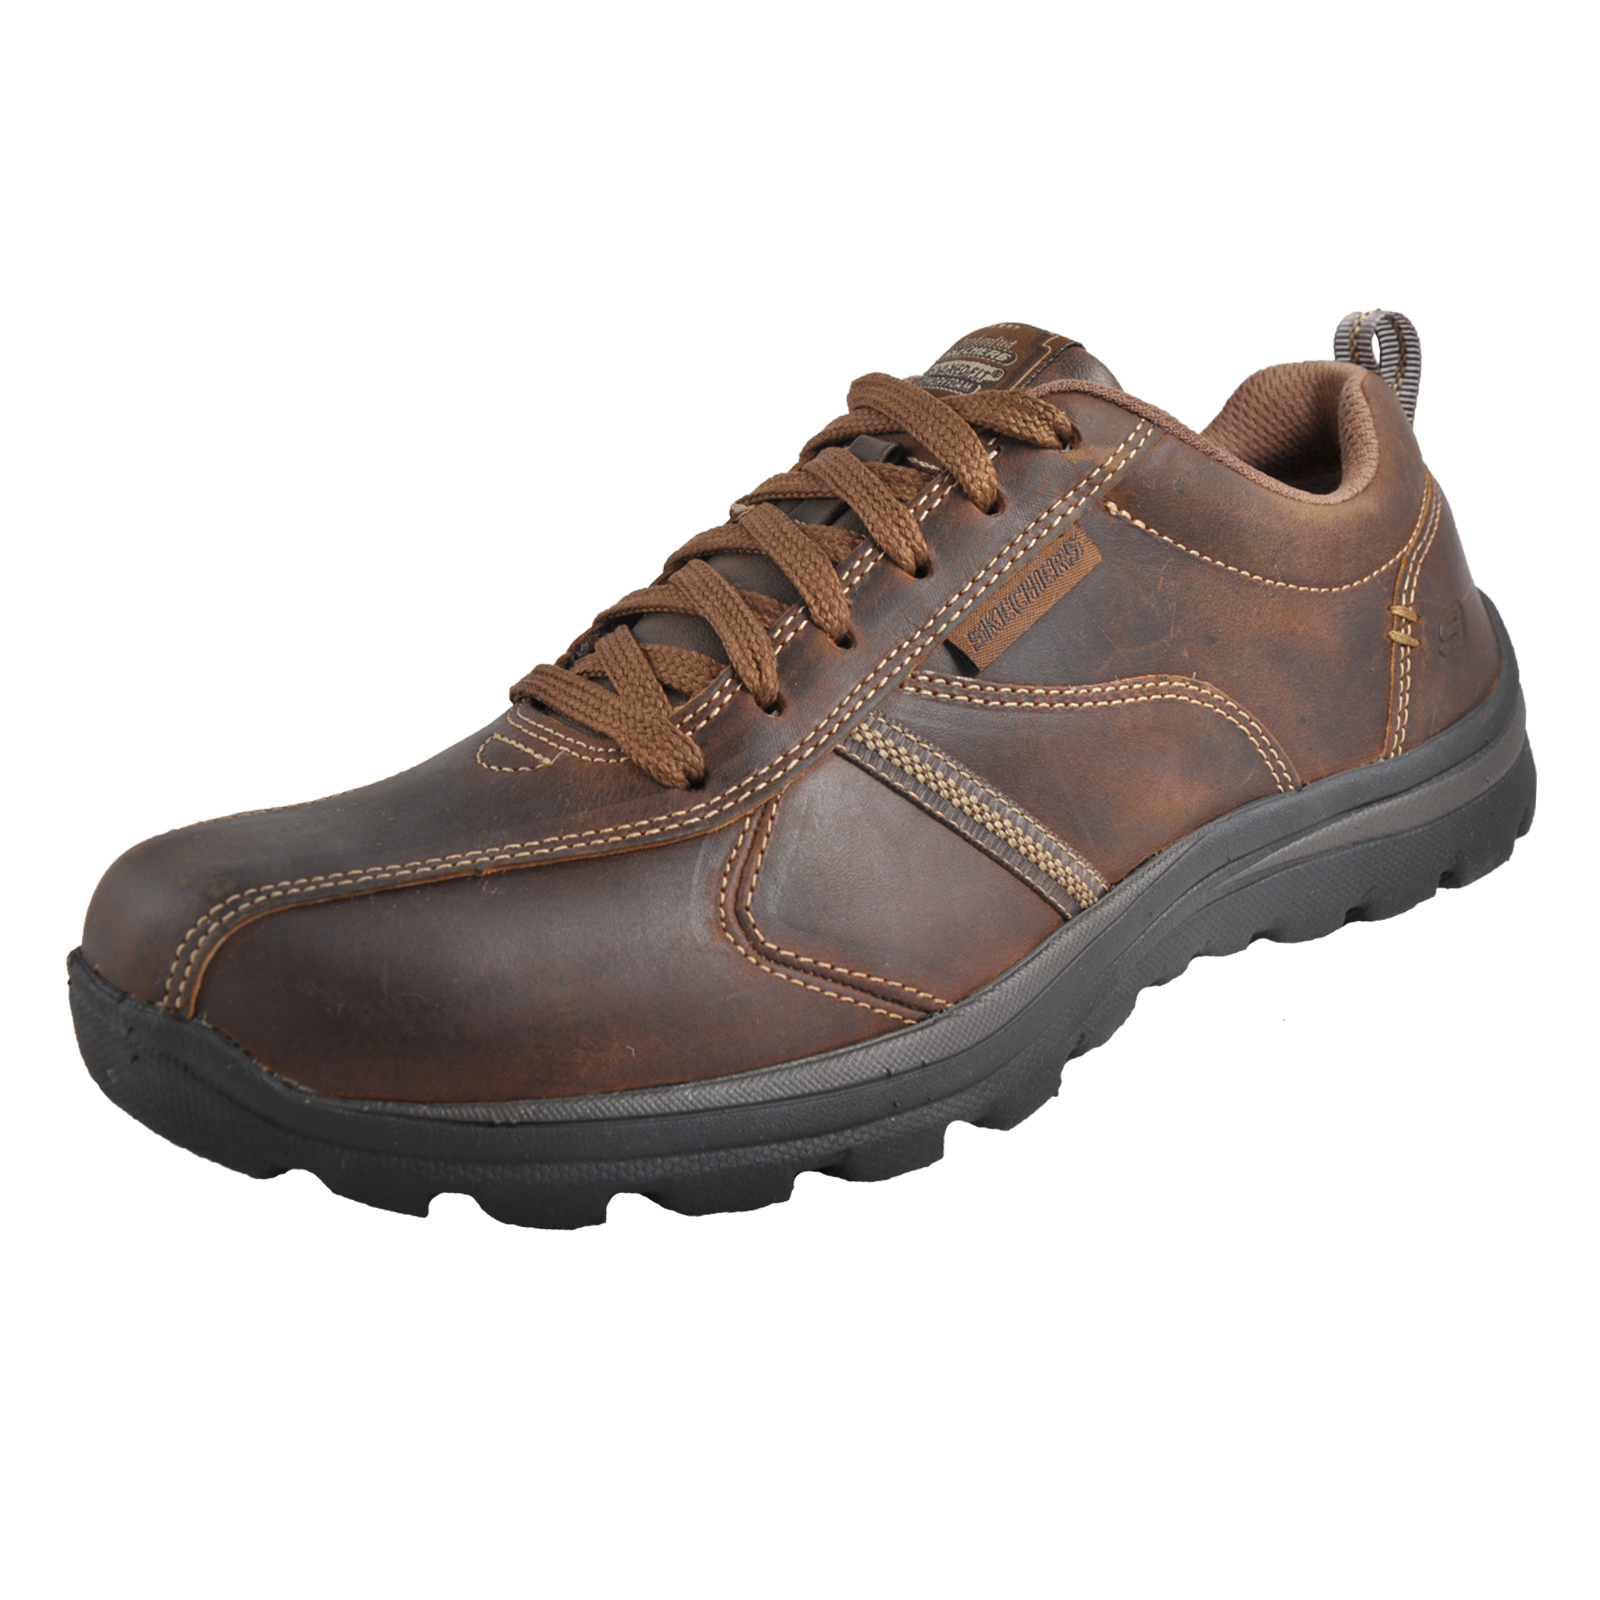 Skechers Levoy Memory Foam Mens Casual Leather Shoes Brown | eBay